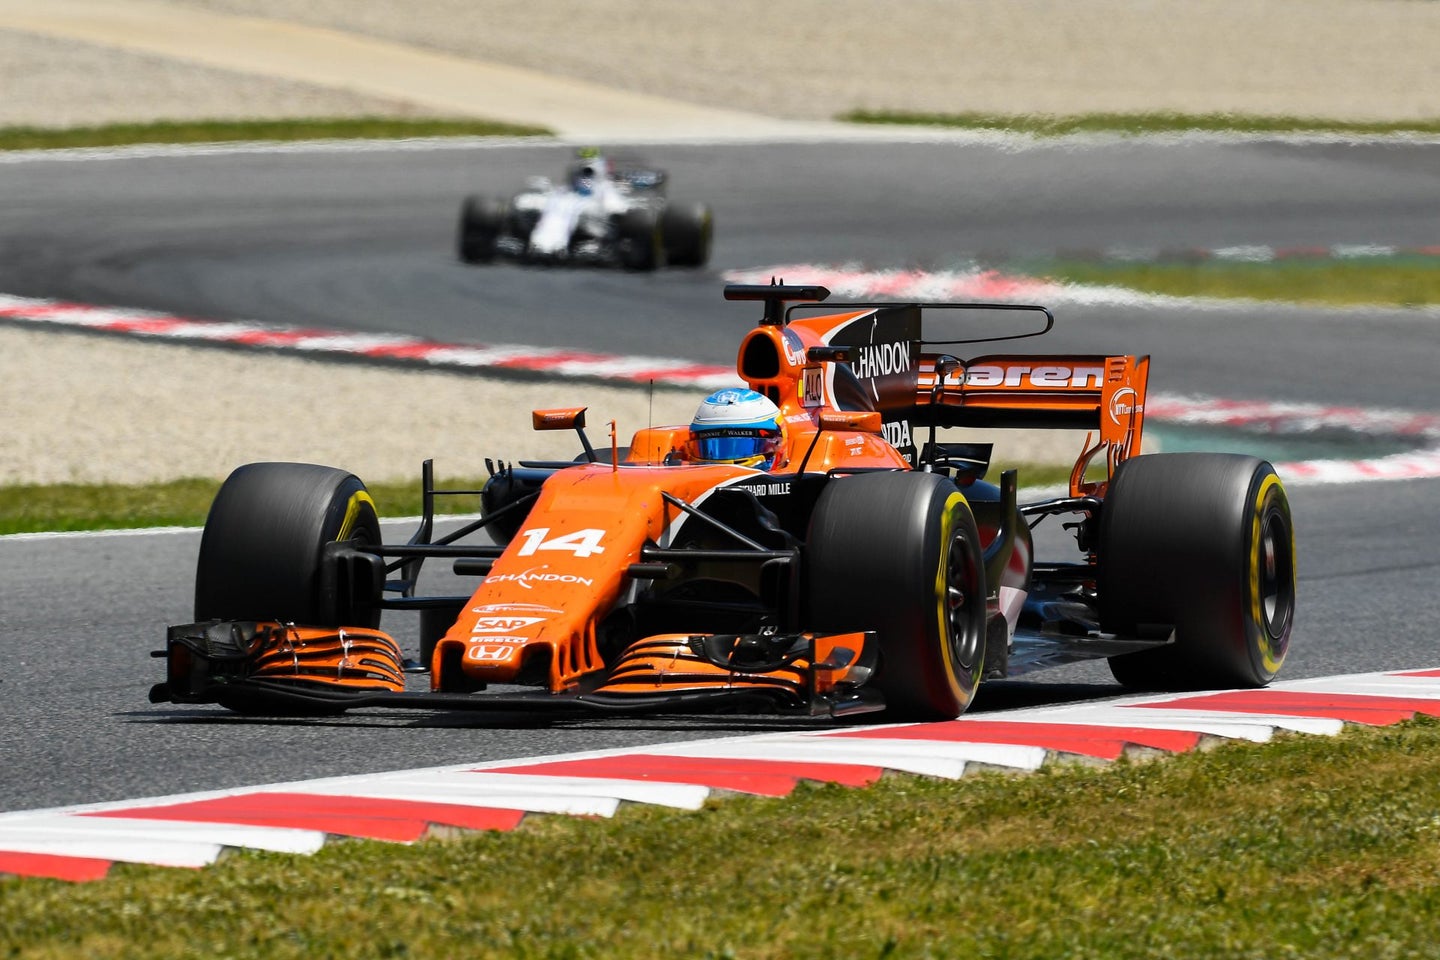 Fernando Alonso’s McLaren-Honda Finally Finished a Race